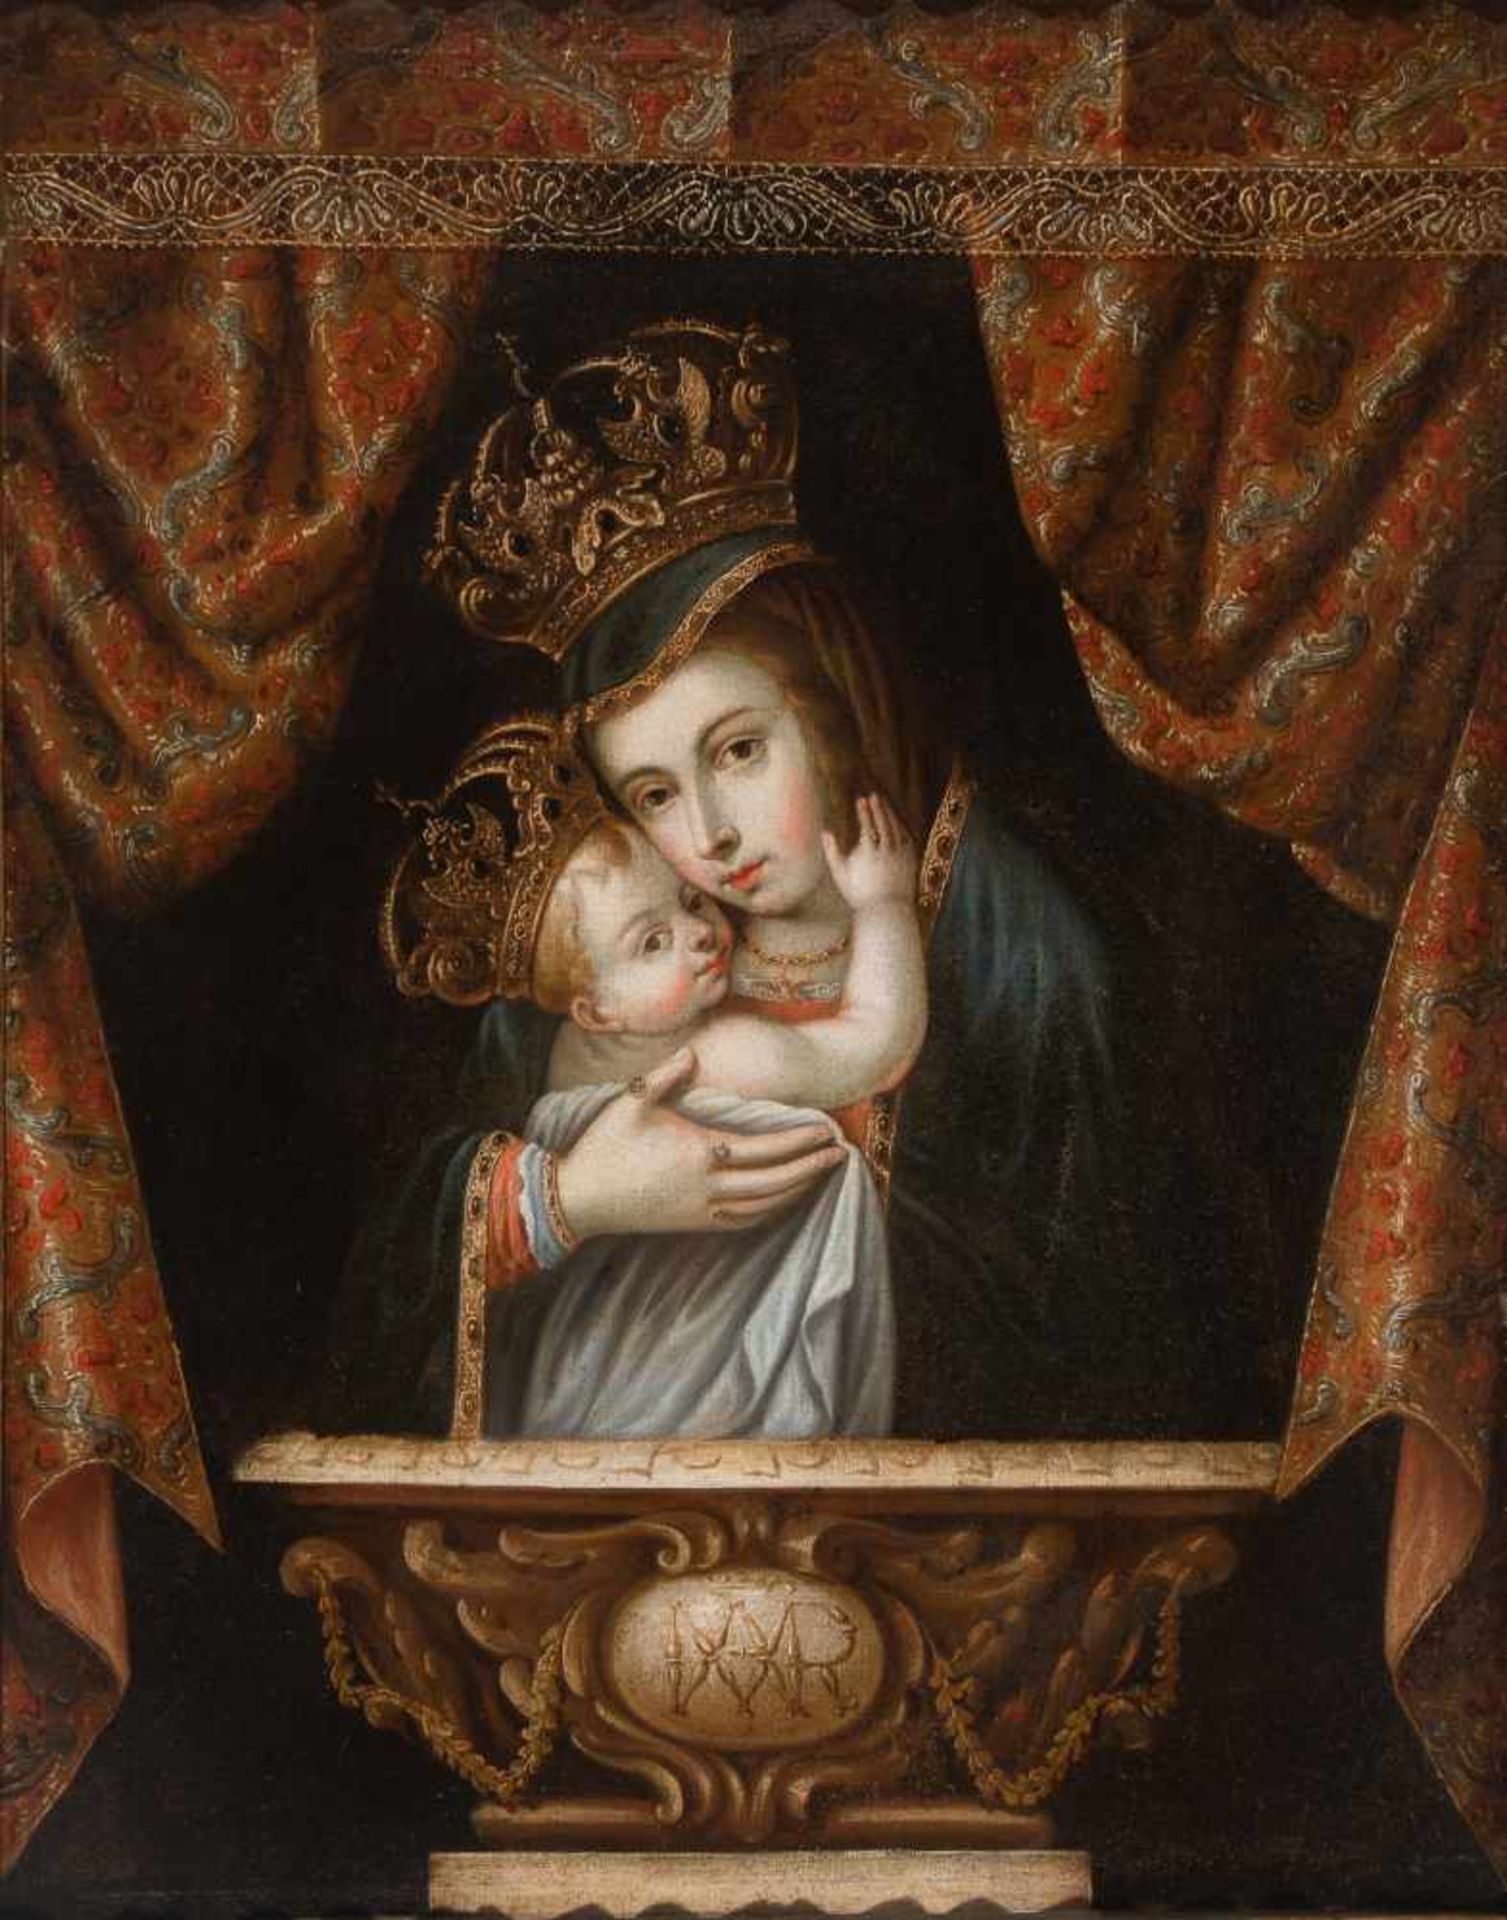 17th century Madrid School. Juan Bautista de Espinosa´s circle (c. 1585-1641) "Madonna and Child"